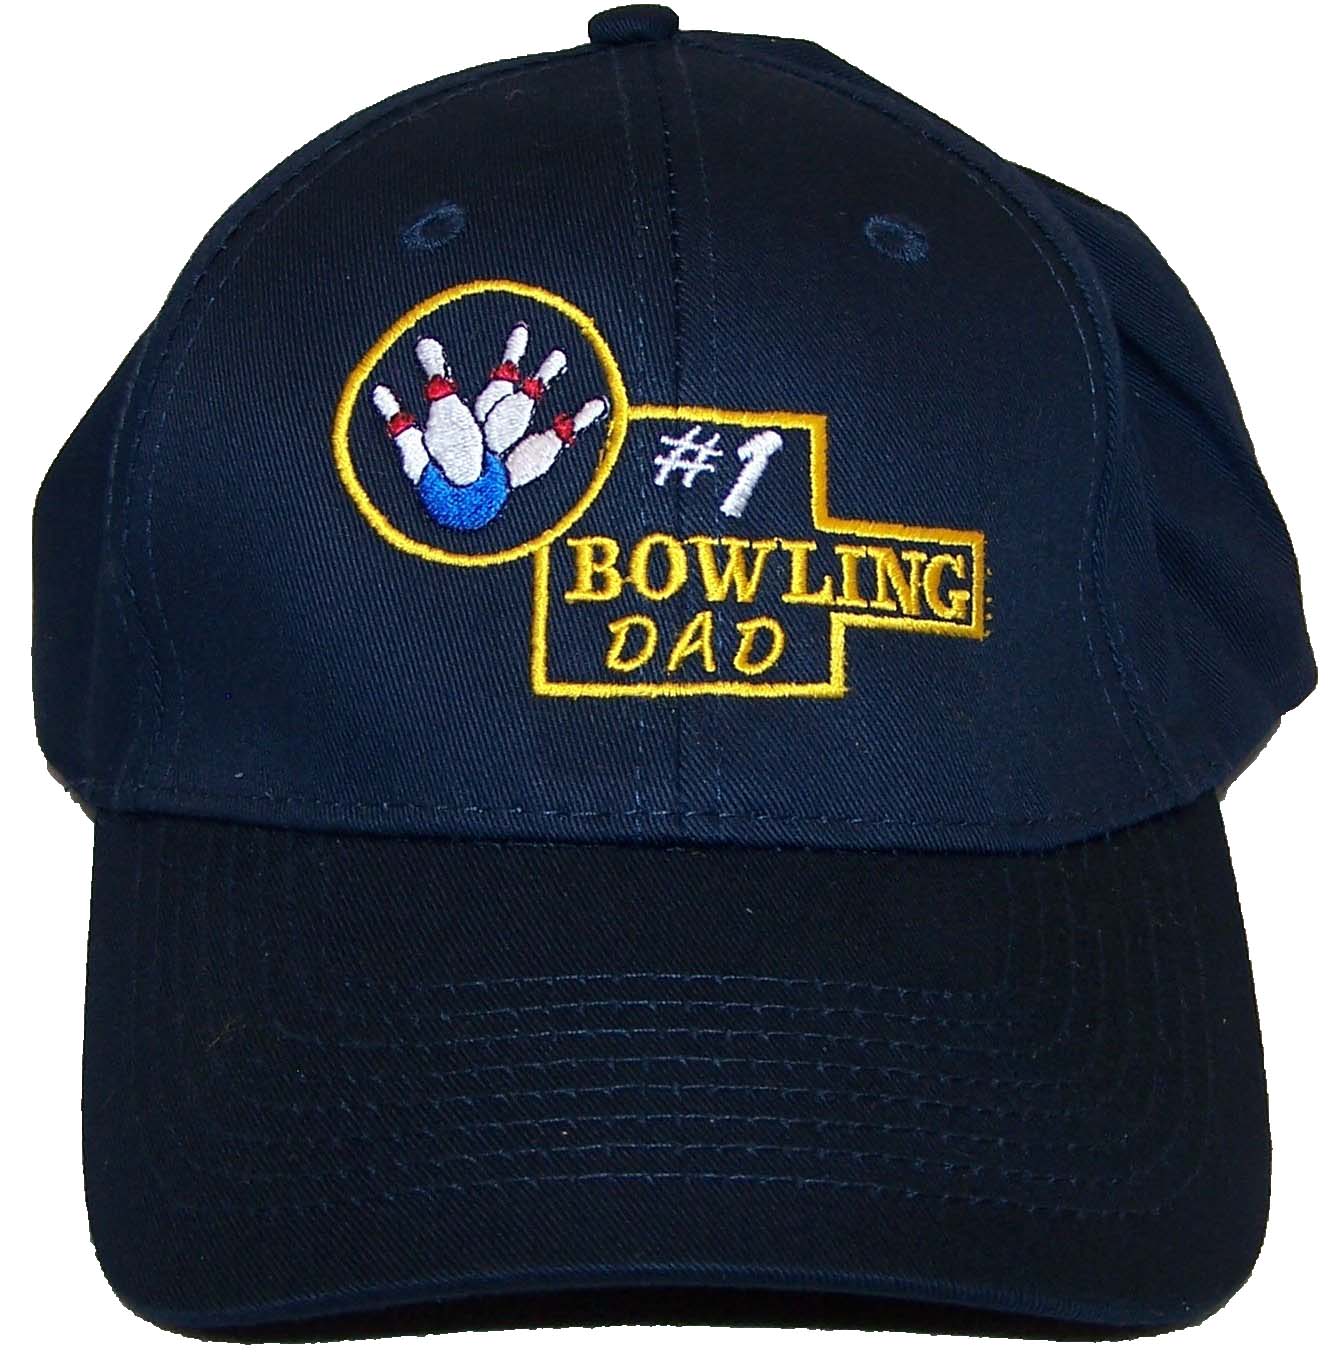 #1 Bowling Dad Baseball Hat